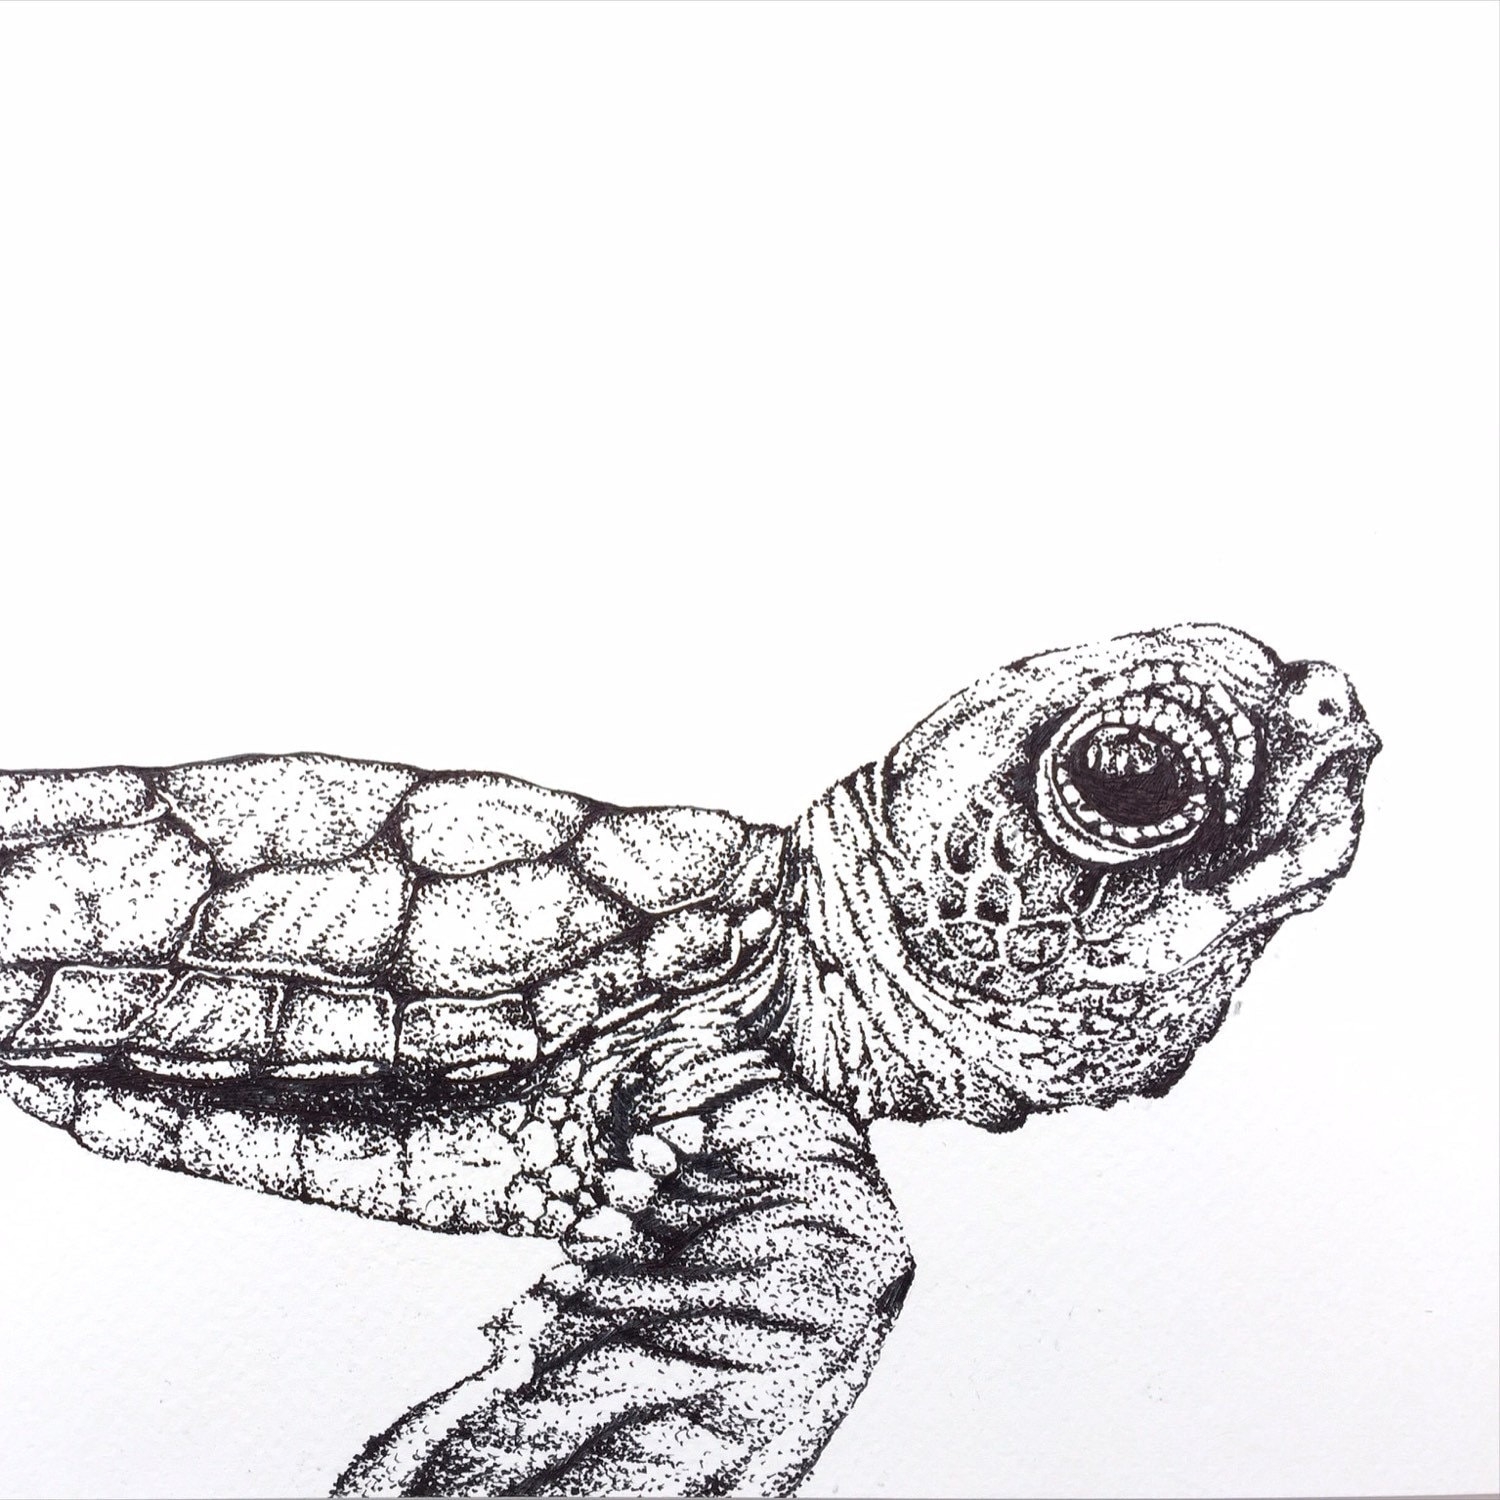 Черепаха рисунок карандашом